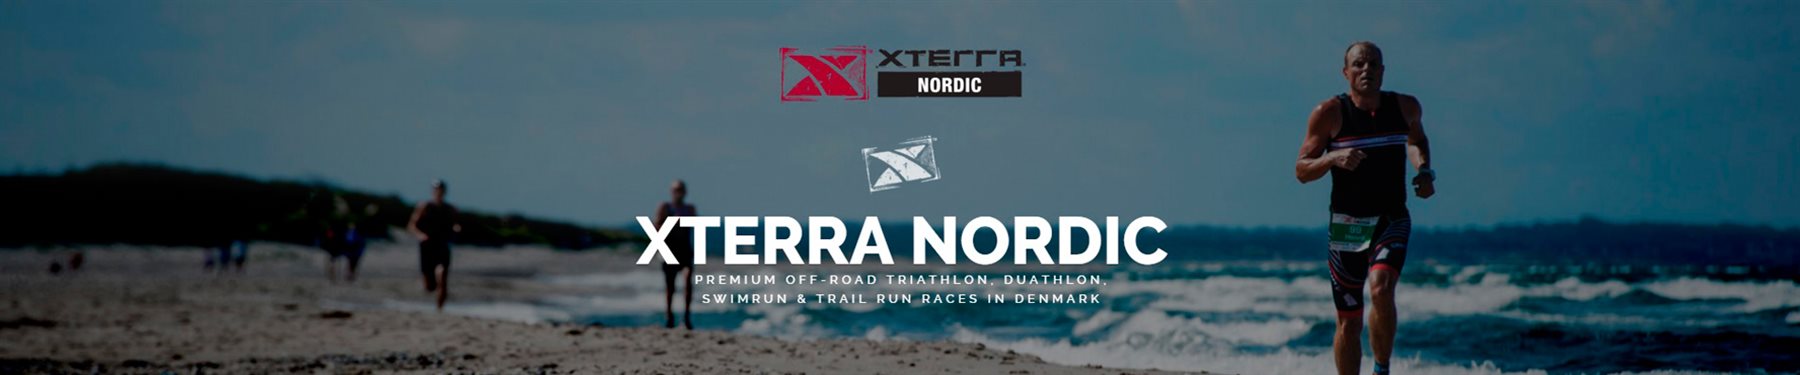 XTERRA European Championship 2017, Møns Klint